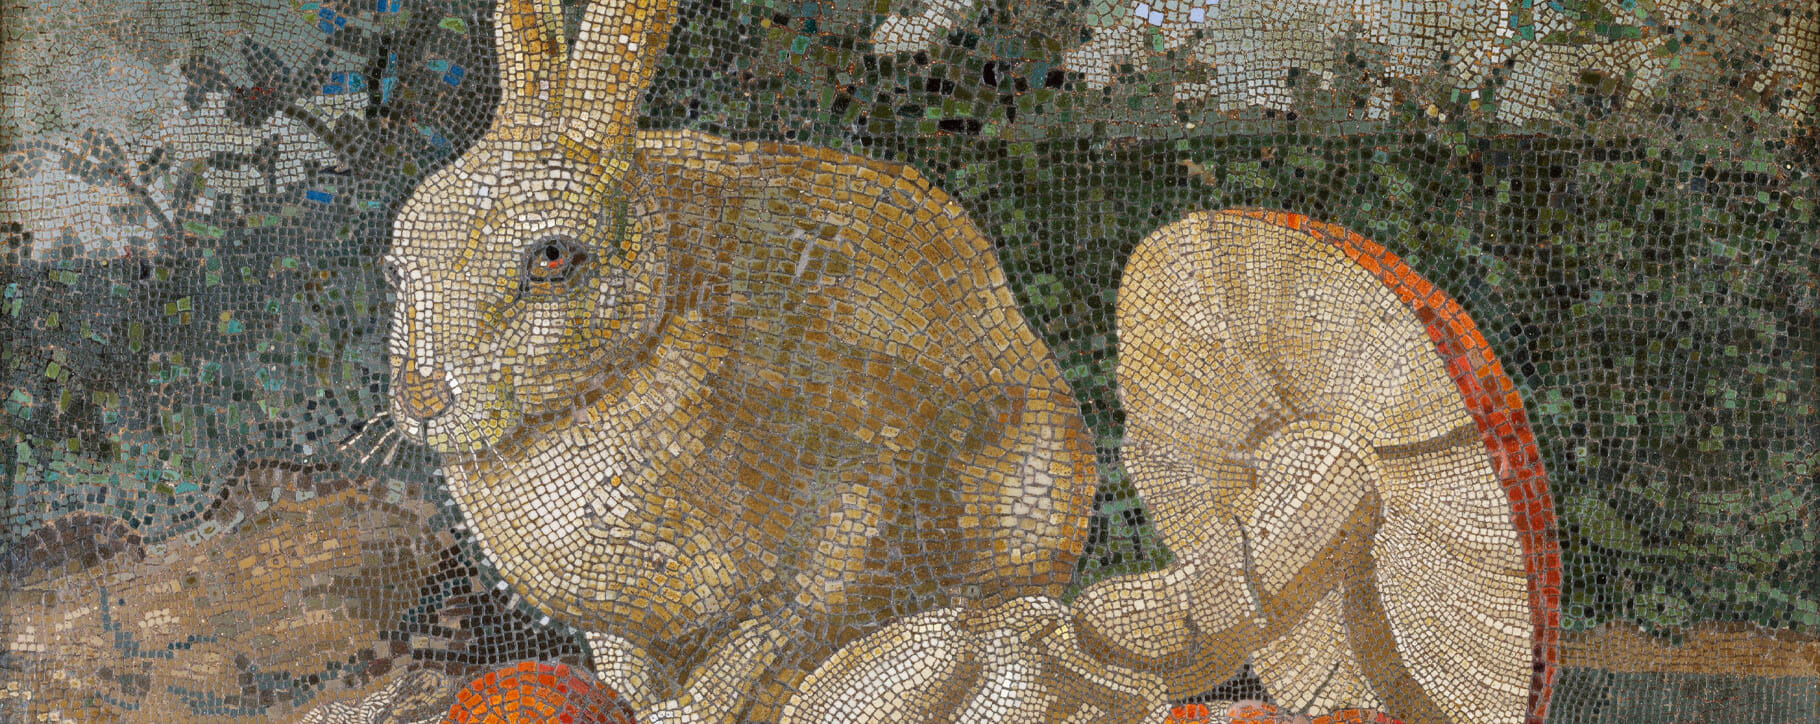 Bunny mosaic 19th century